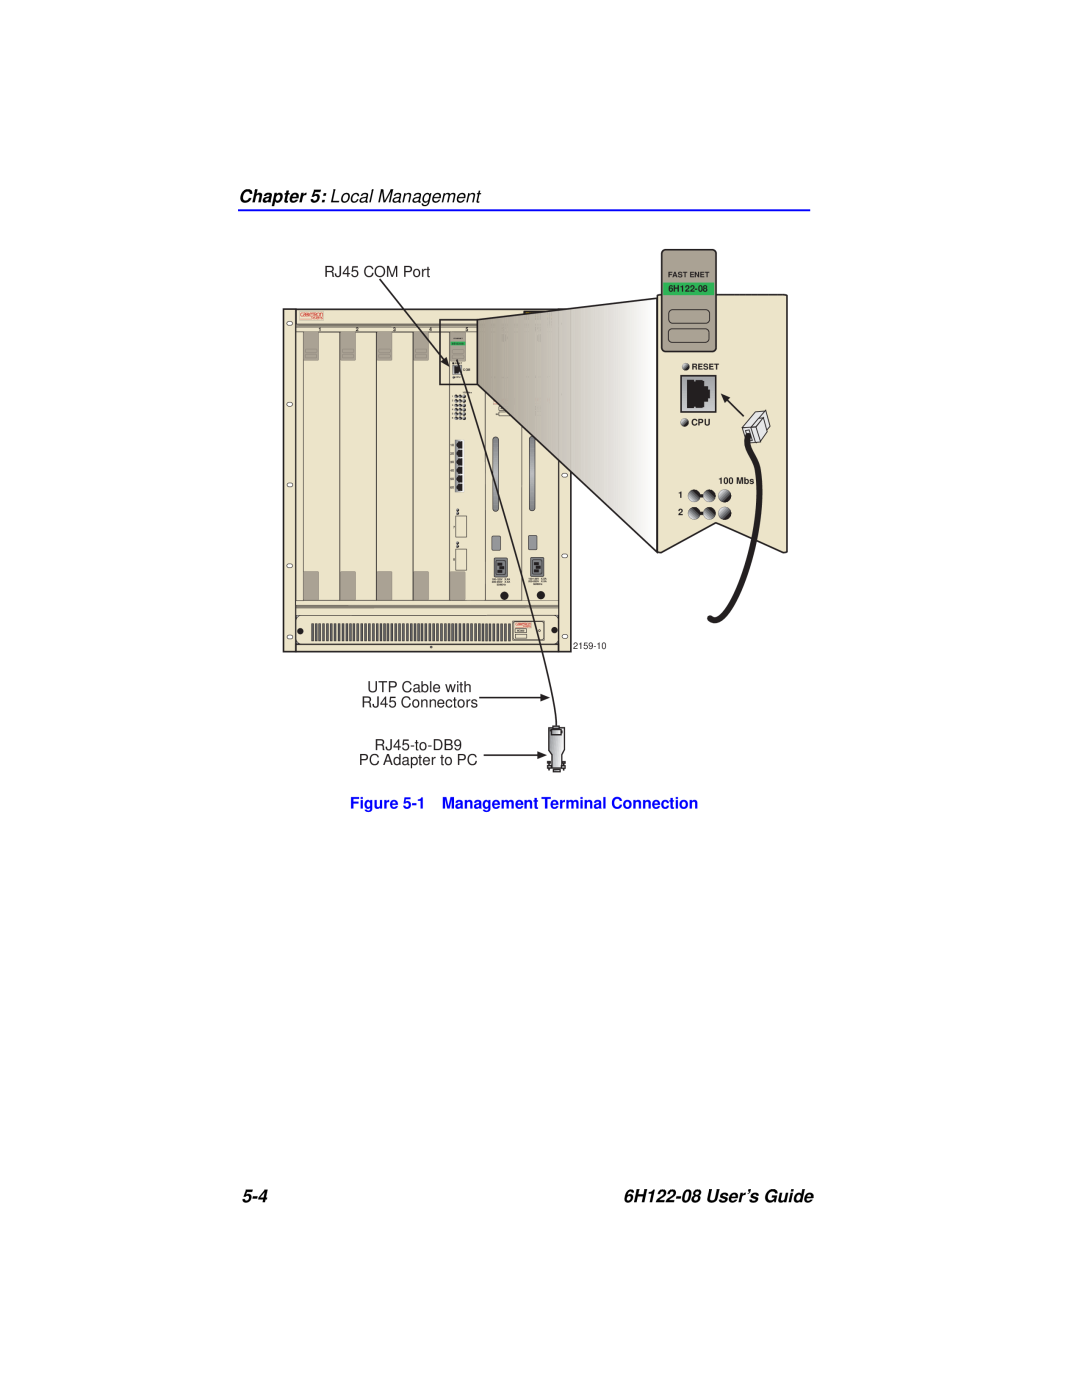 Cabletron Systems Local Management, 6H122-08 User’s Guide, 1 Management Terminal Connection, RJ45 COM Port, Fast Enet 